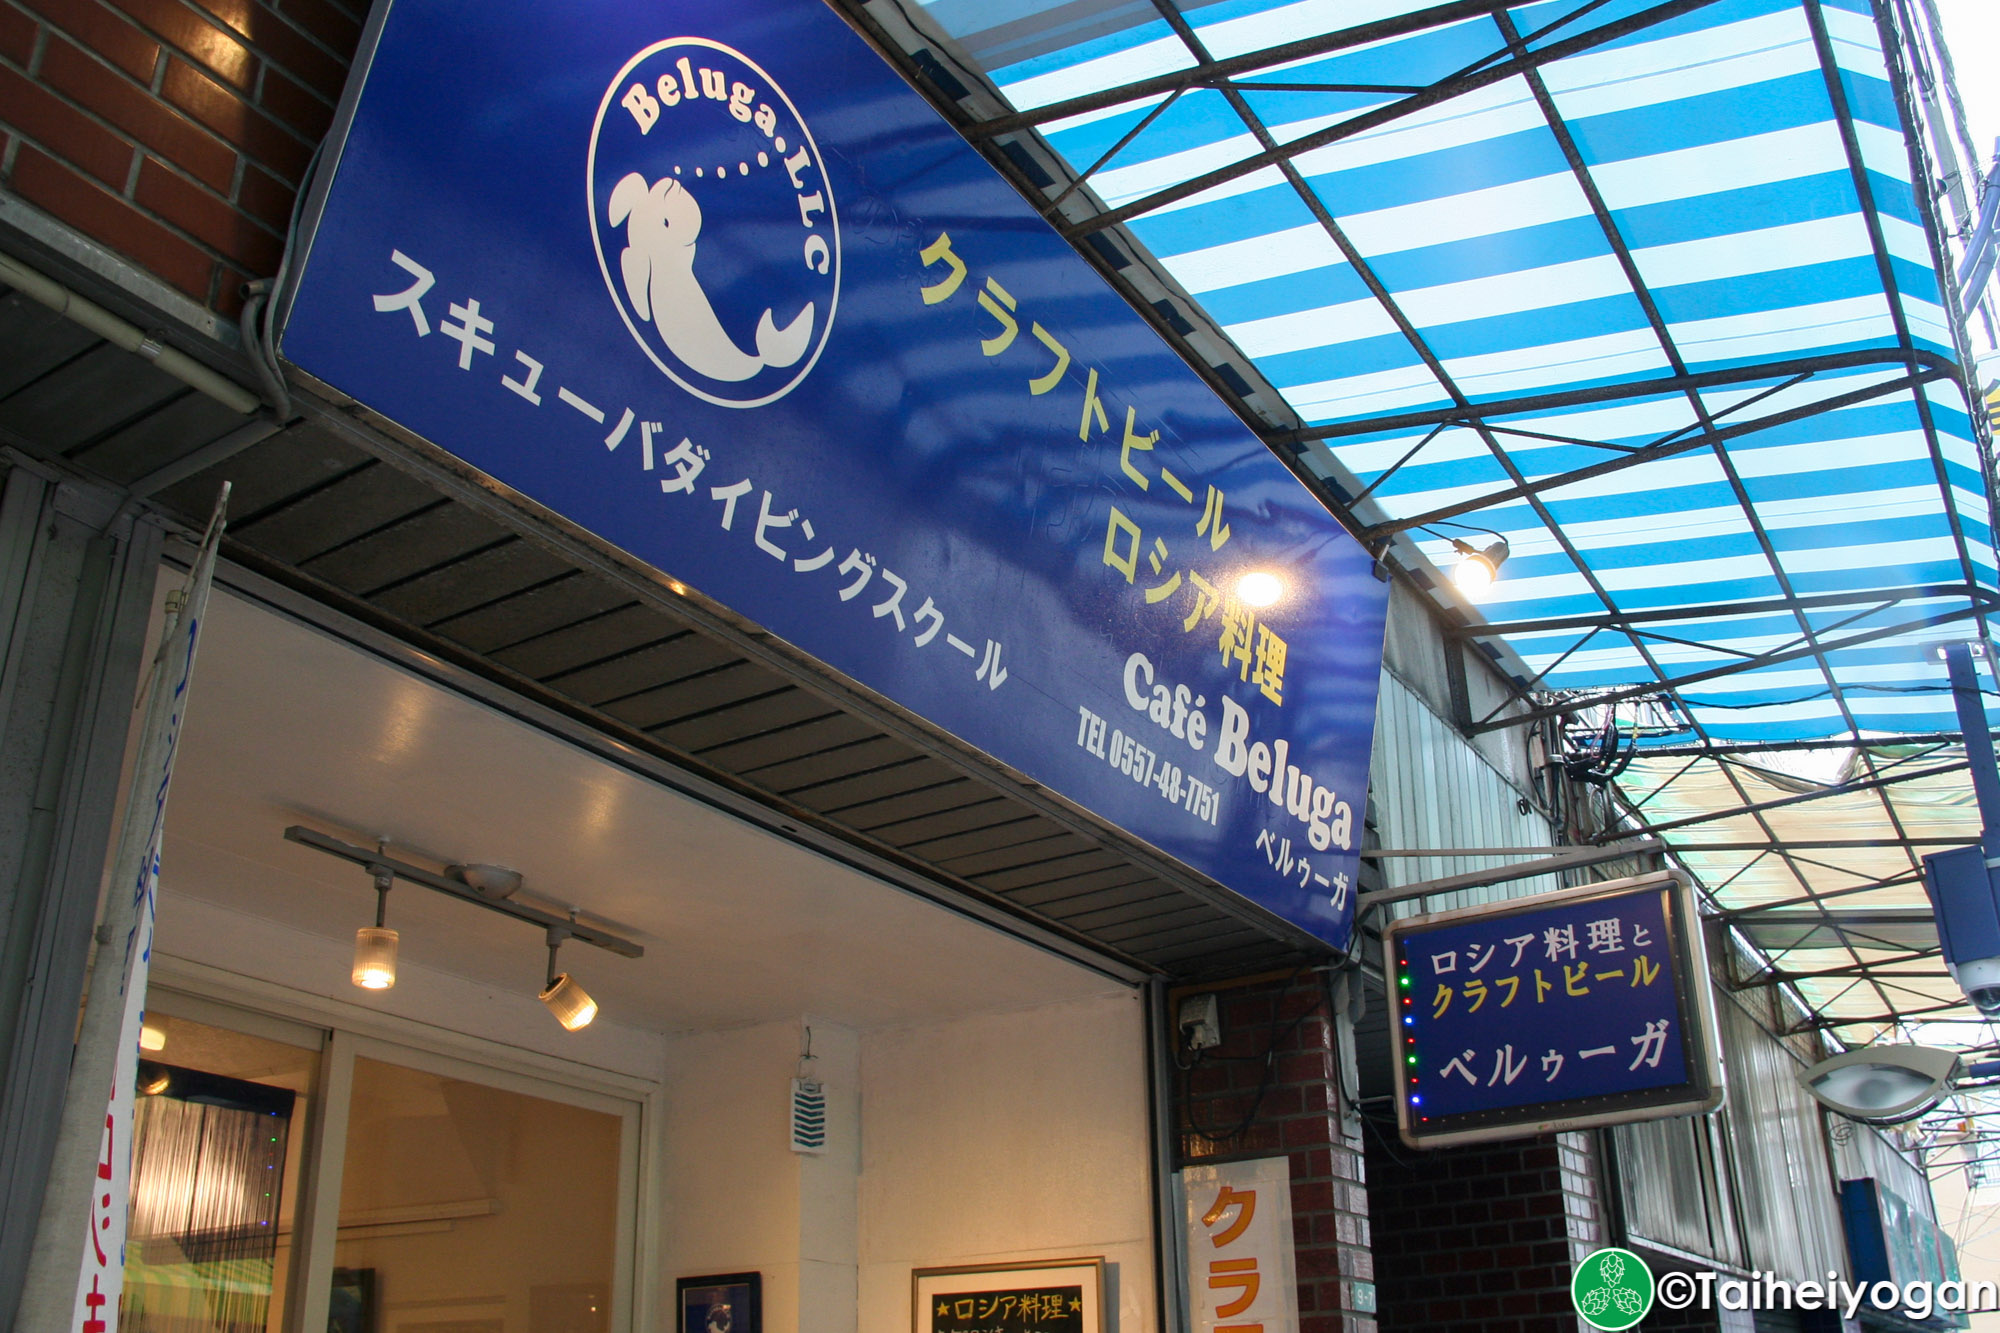 Cafe Beluga - Entrance - Sign